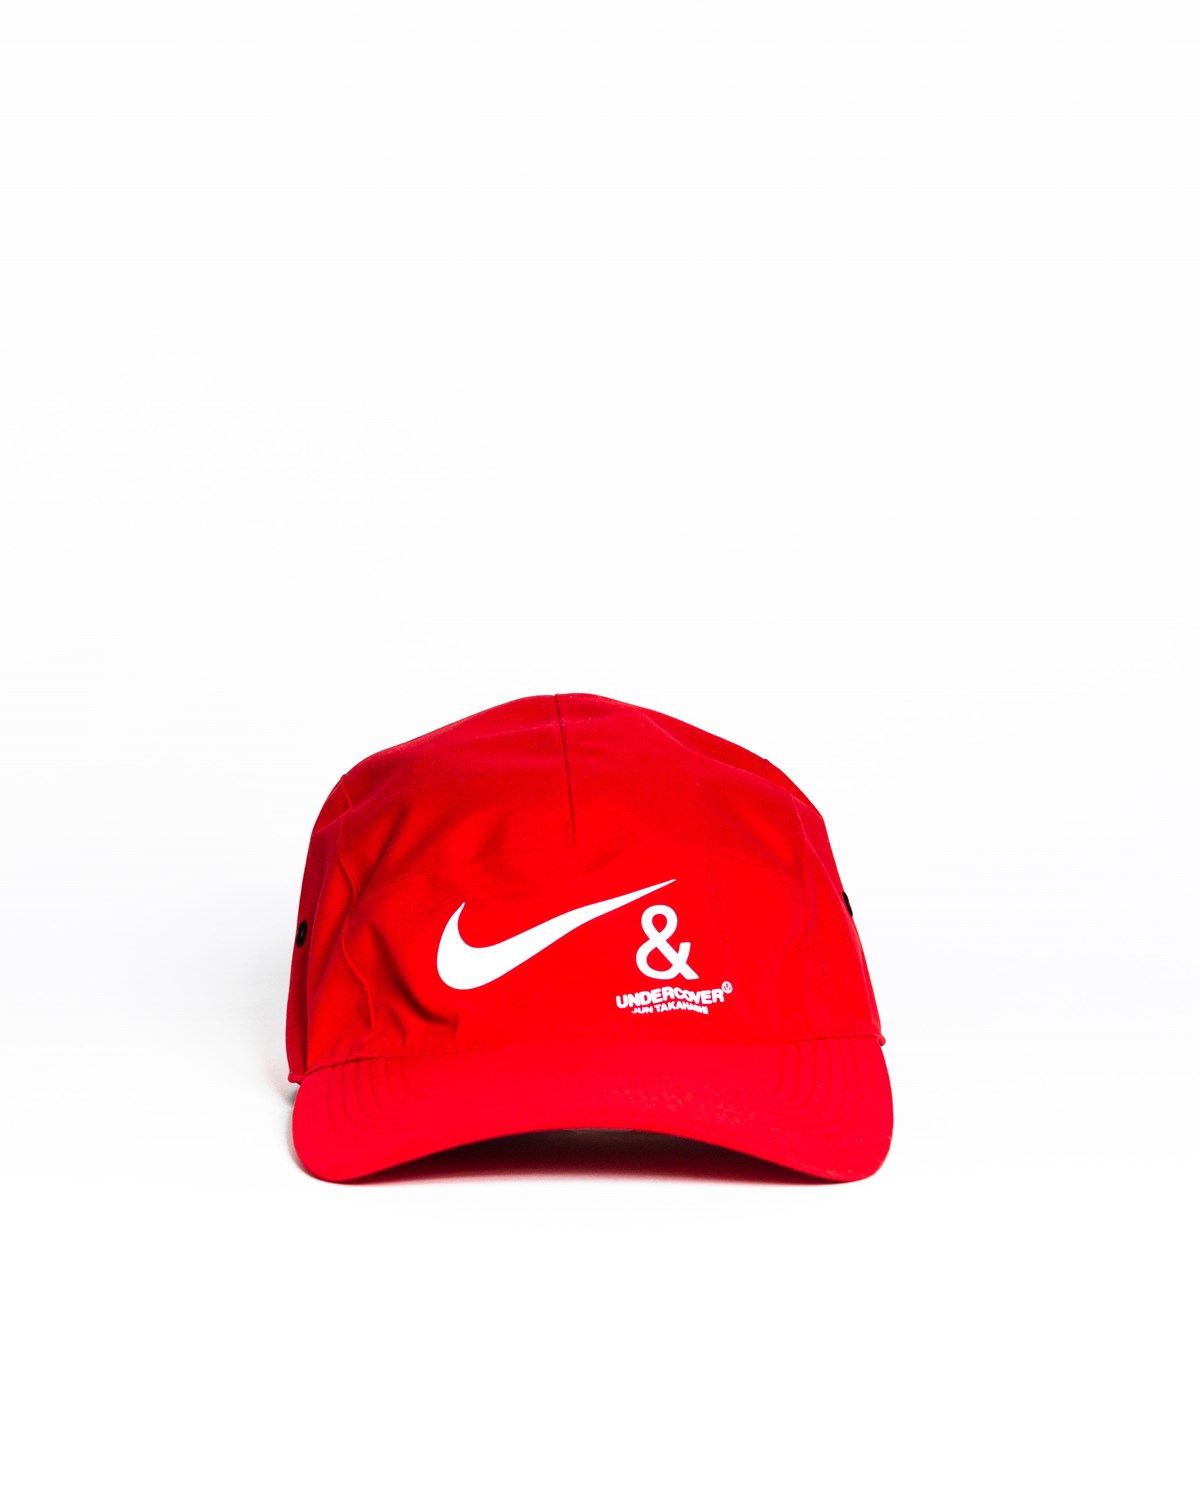 NRG Undercover Cap Nike Headwear Caps Red